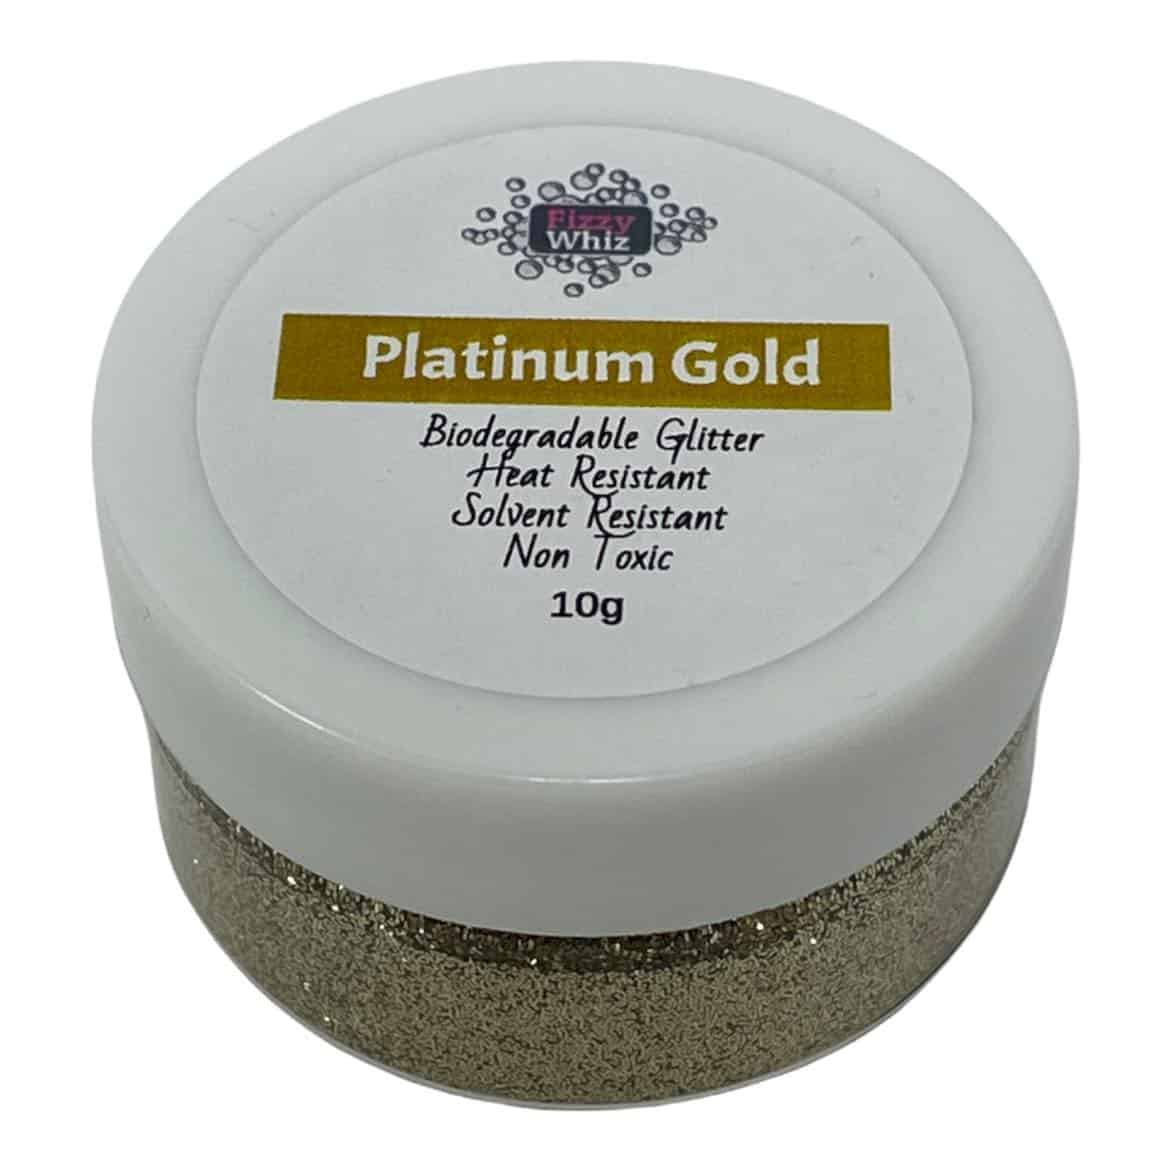 Biodegradable Platinum Gold Glitter